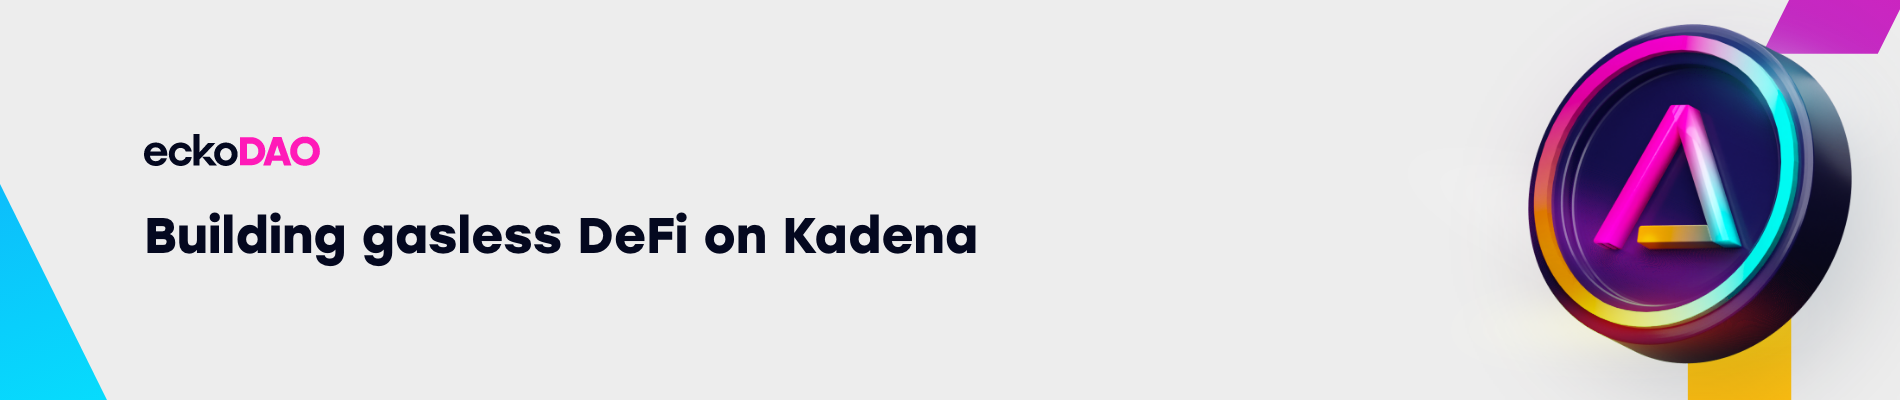 eckoDEX: The first Decentralized Exchange on Kadena